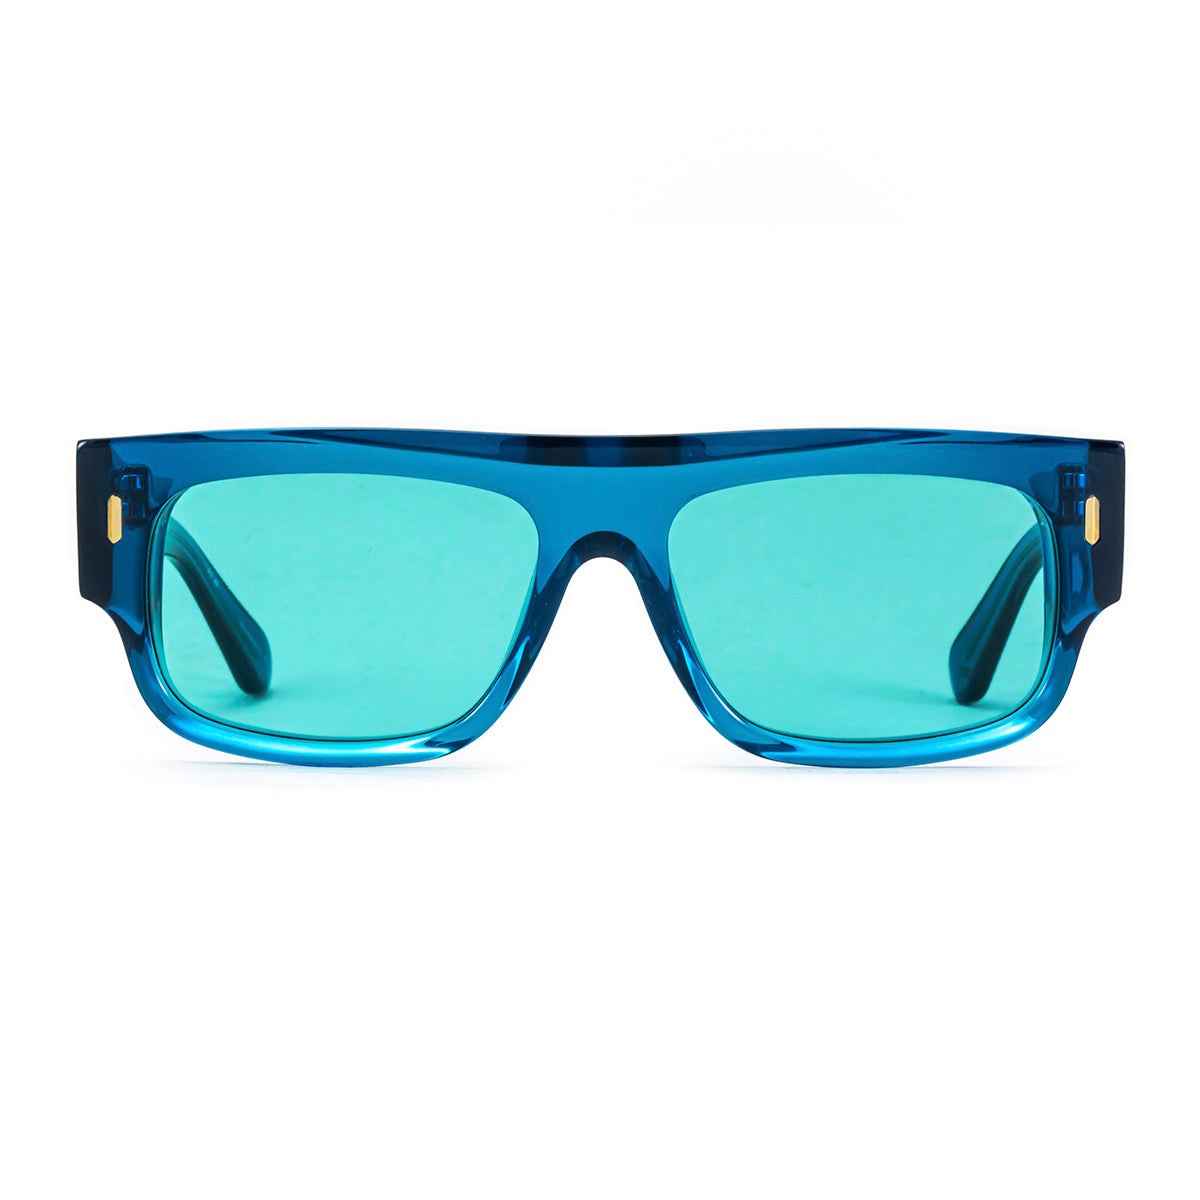 Glasgow Eco Briller - Translucent Blue - Turquoise Lens